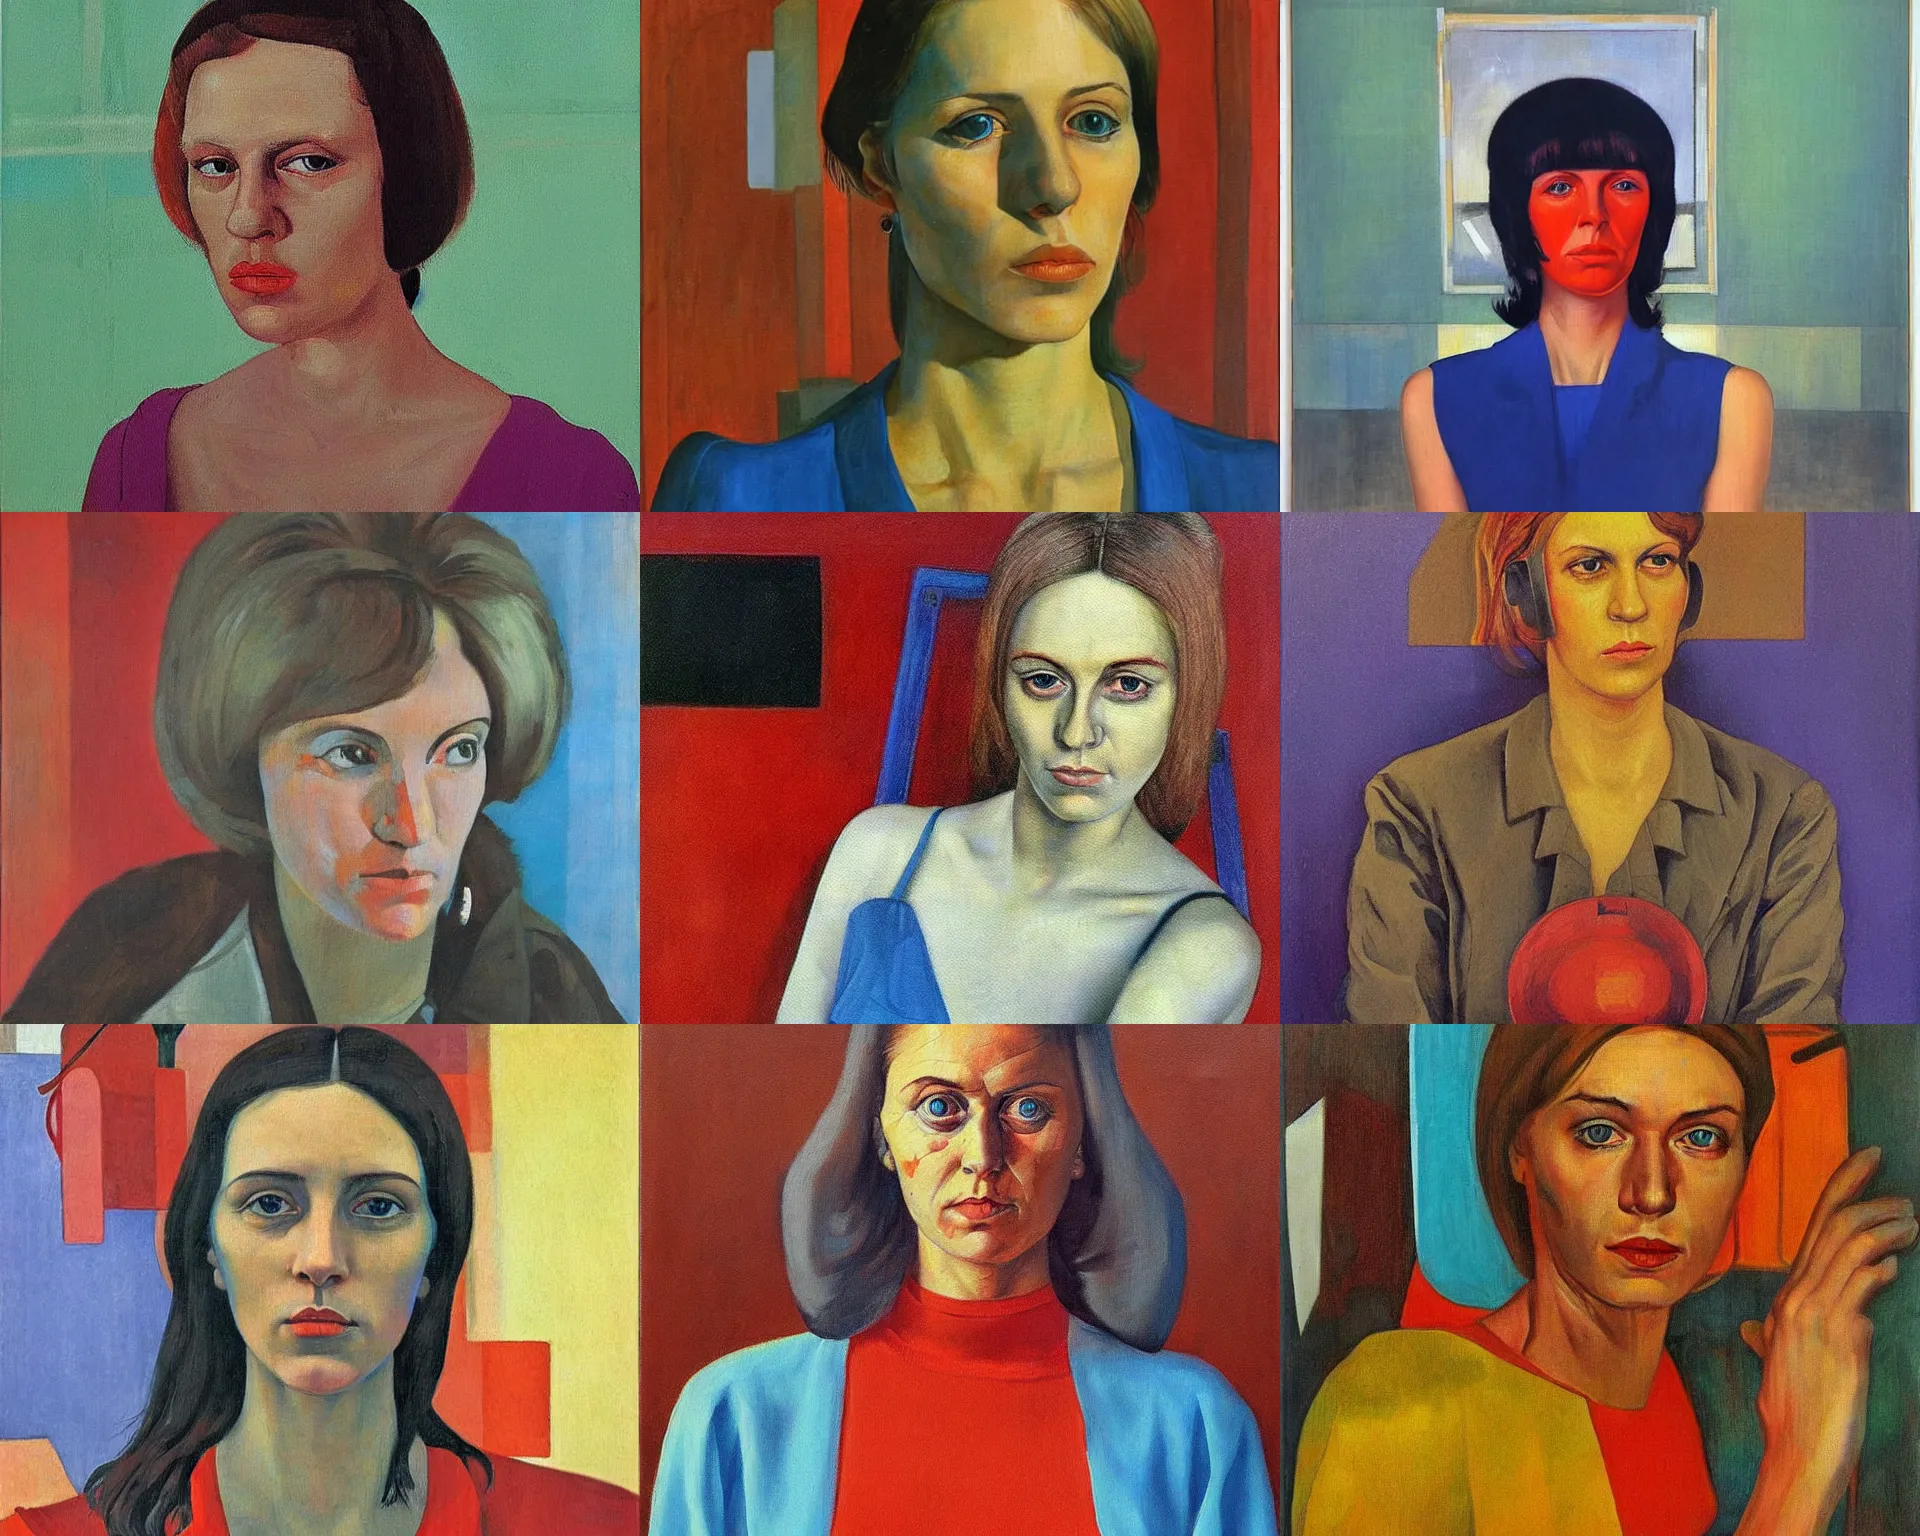 Prompt: woman portrait 1 9 7 0 s style, painting by kuzma petrov - vodkin, cyberpunk